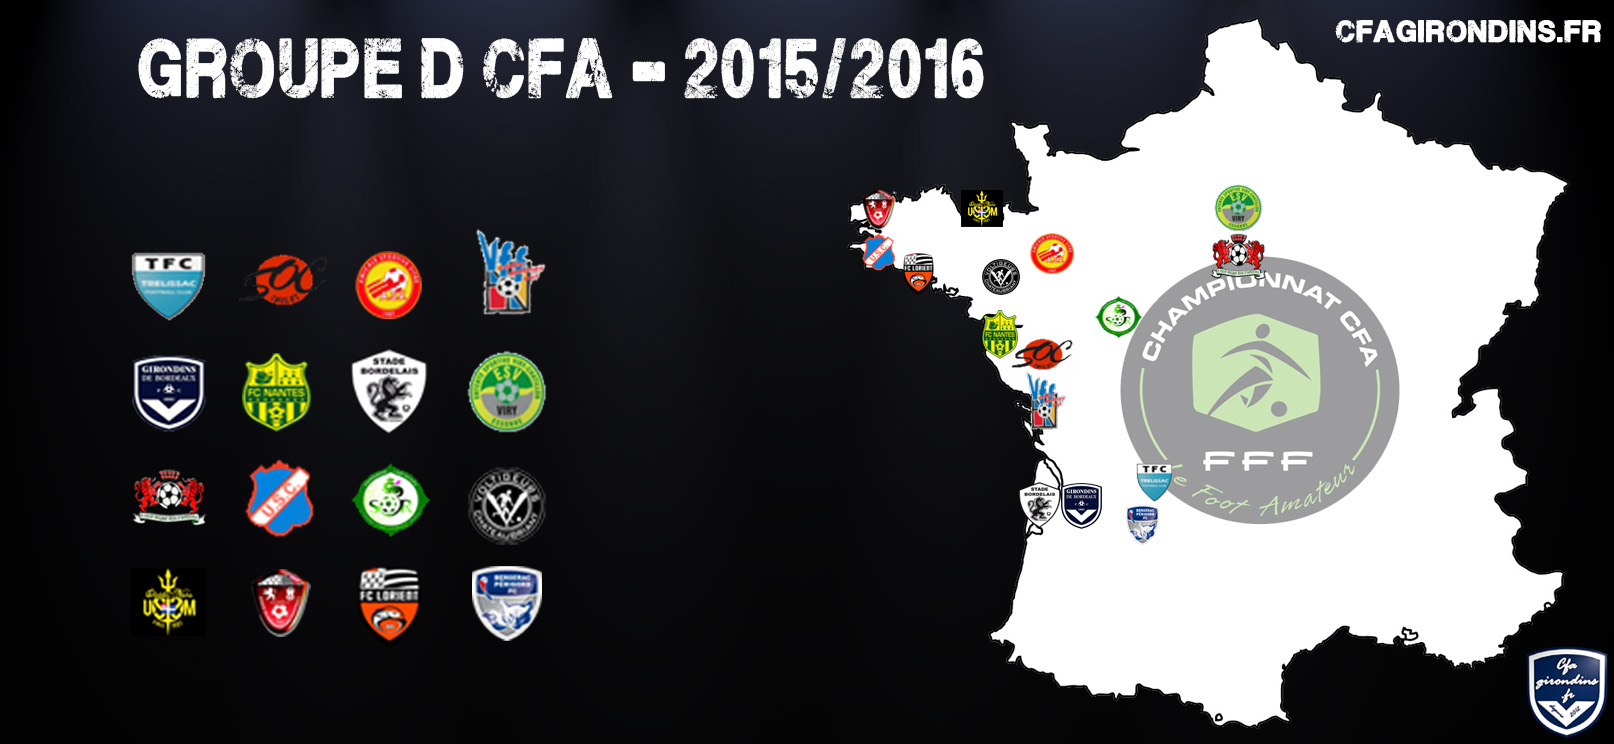 Cfa Girondins : CFA : Présentation du groupe D - Formation Girondins 